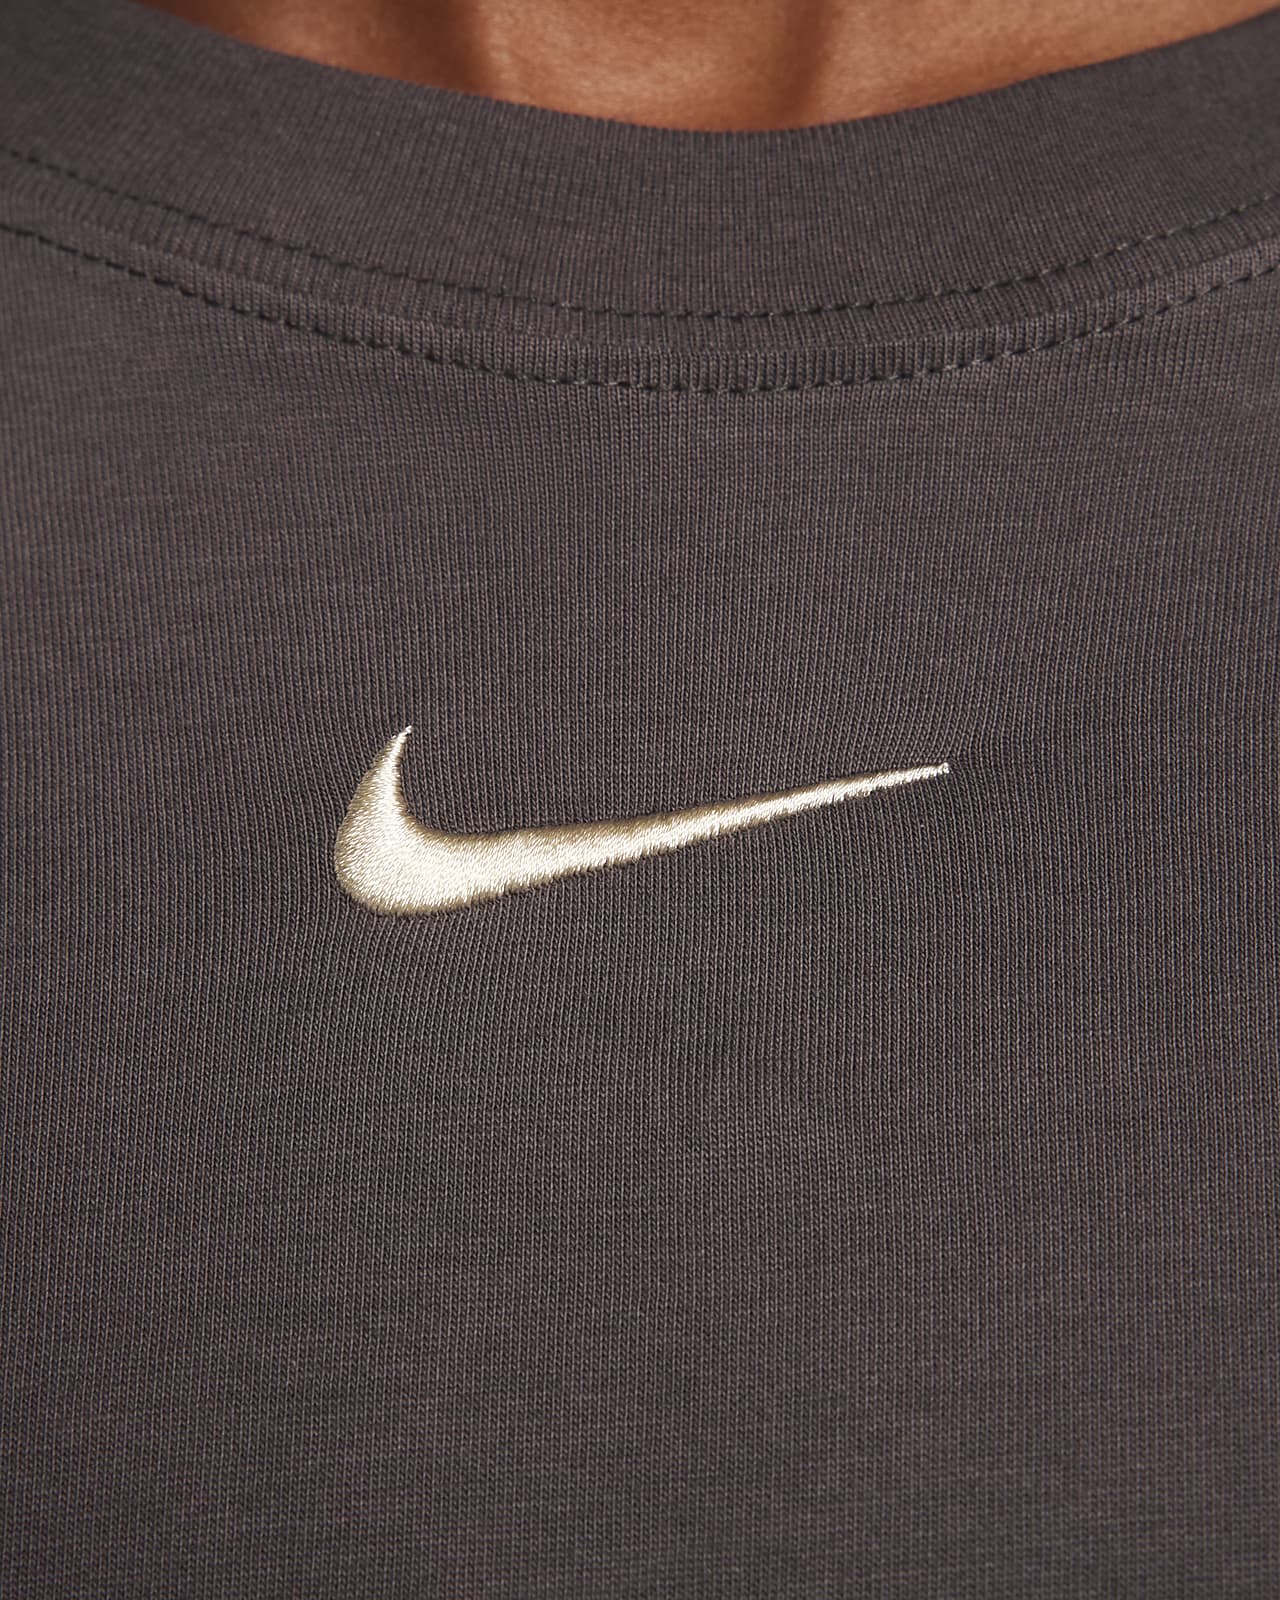 Women's Nike Sportswear Icon Clash Long-Sleeve Top – The Closet Inc.